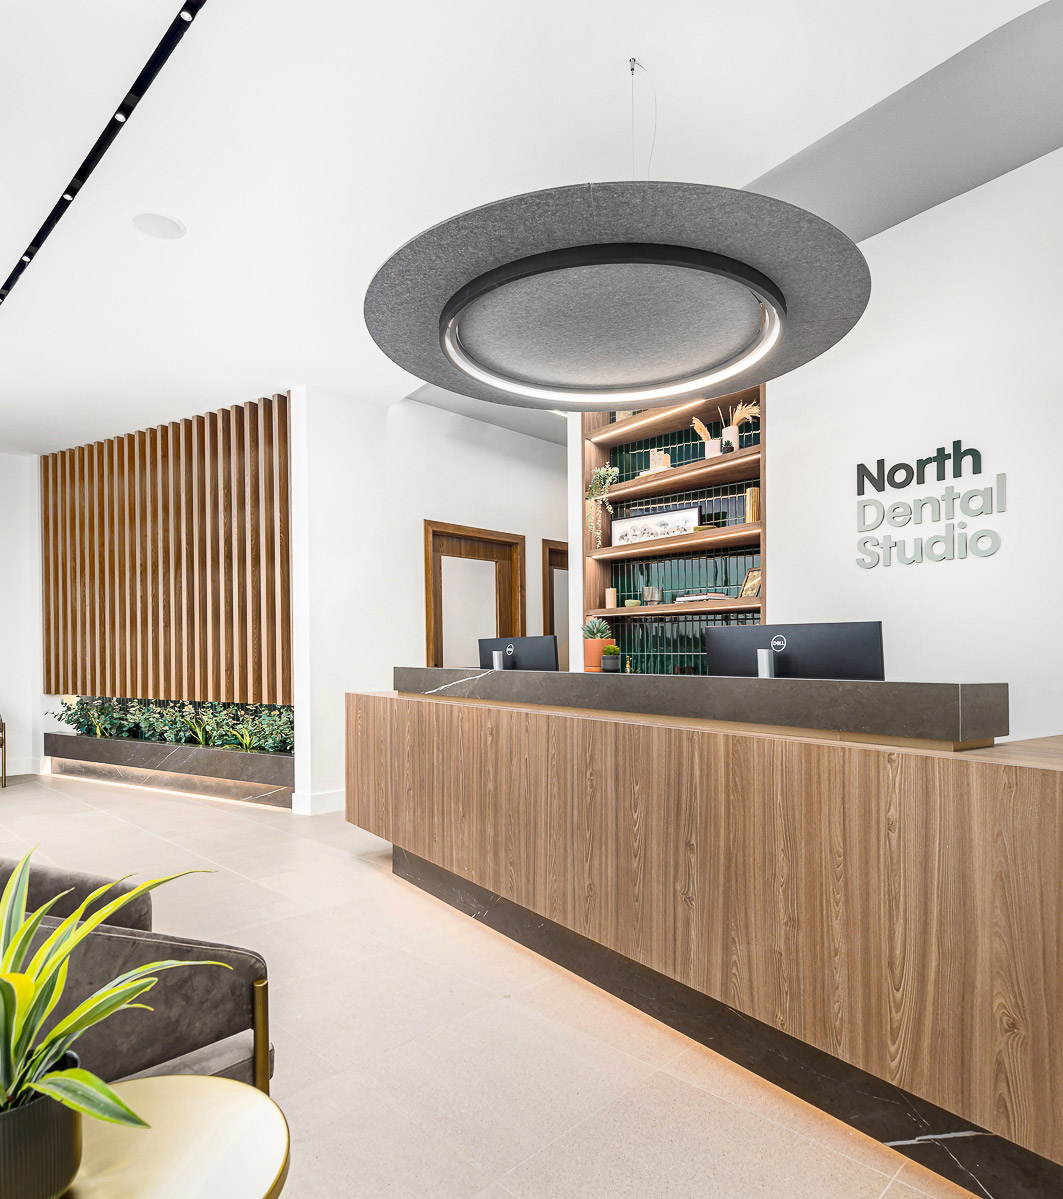 North Dental Studio